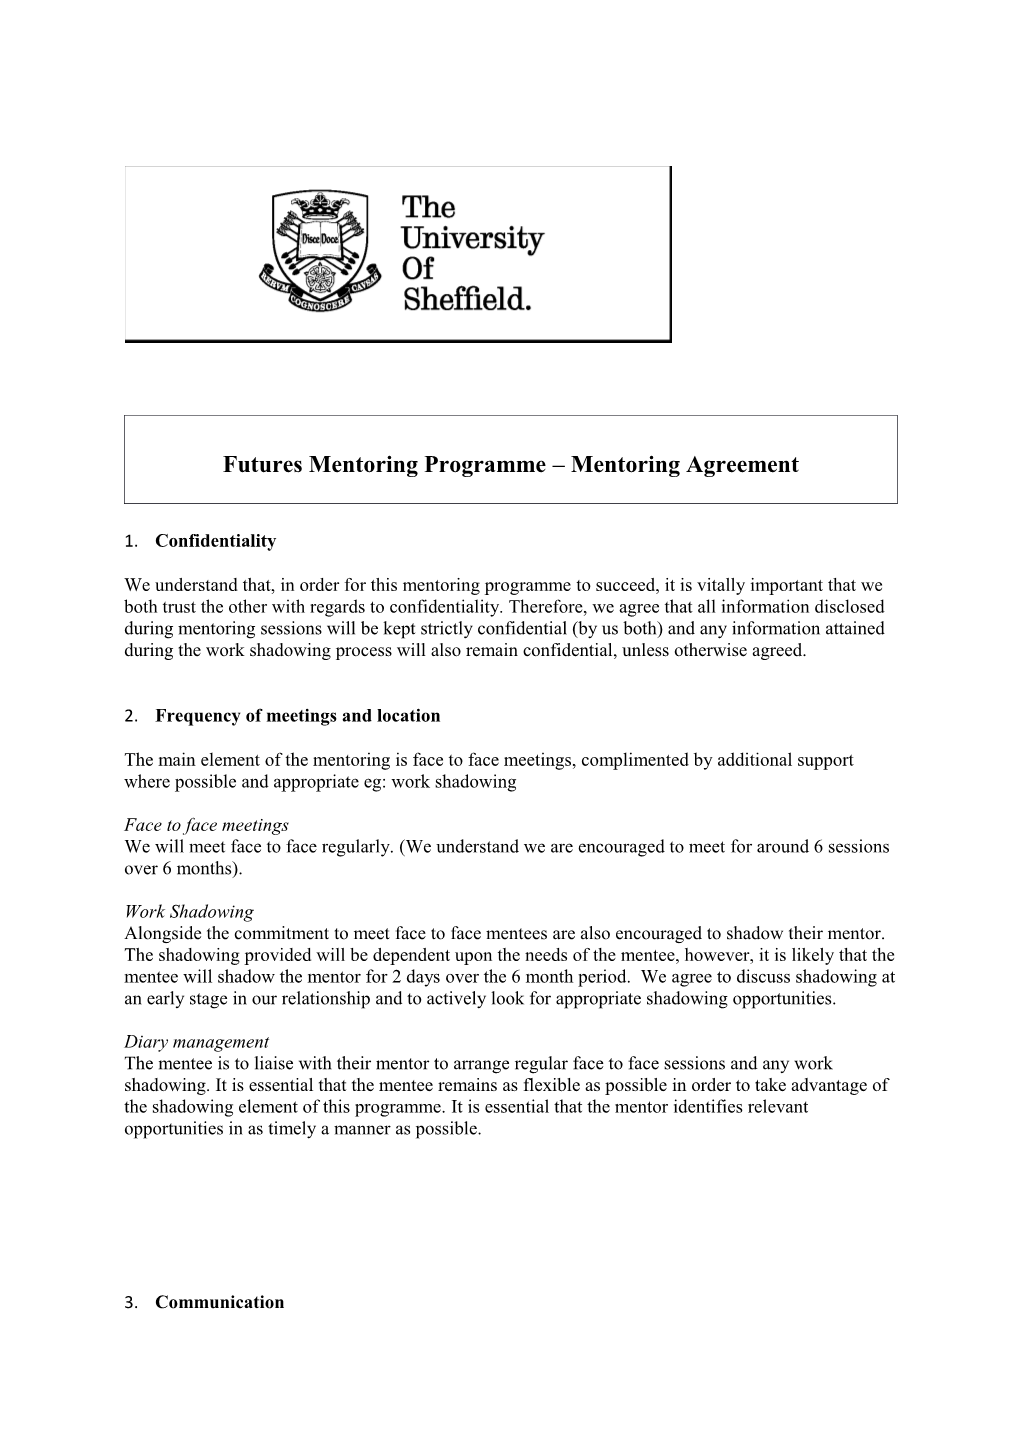 Futures Mentoring Programme Mentoring Agreement